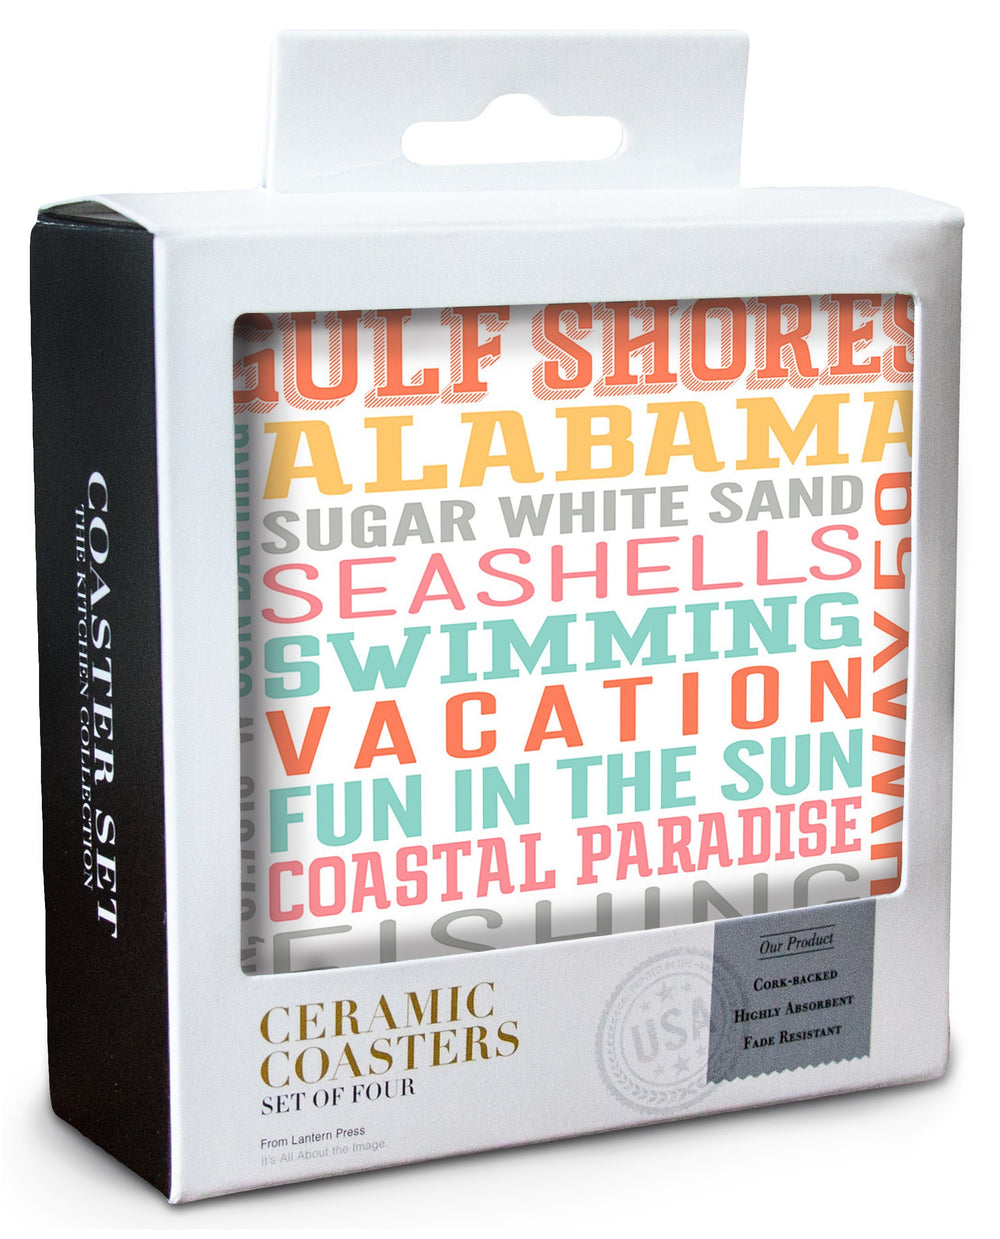 Gulf Shores, Alabama, Typography, Lantern Press Artwork, Coaster Set Coasters Lantern Press 